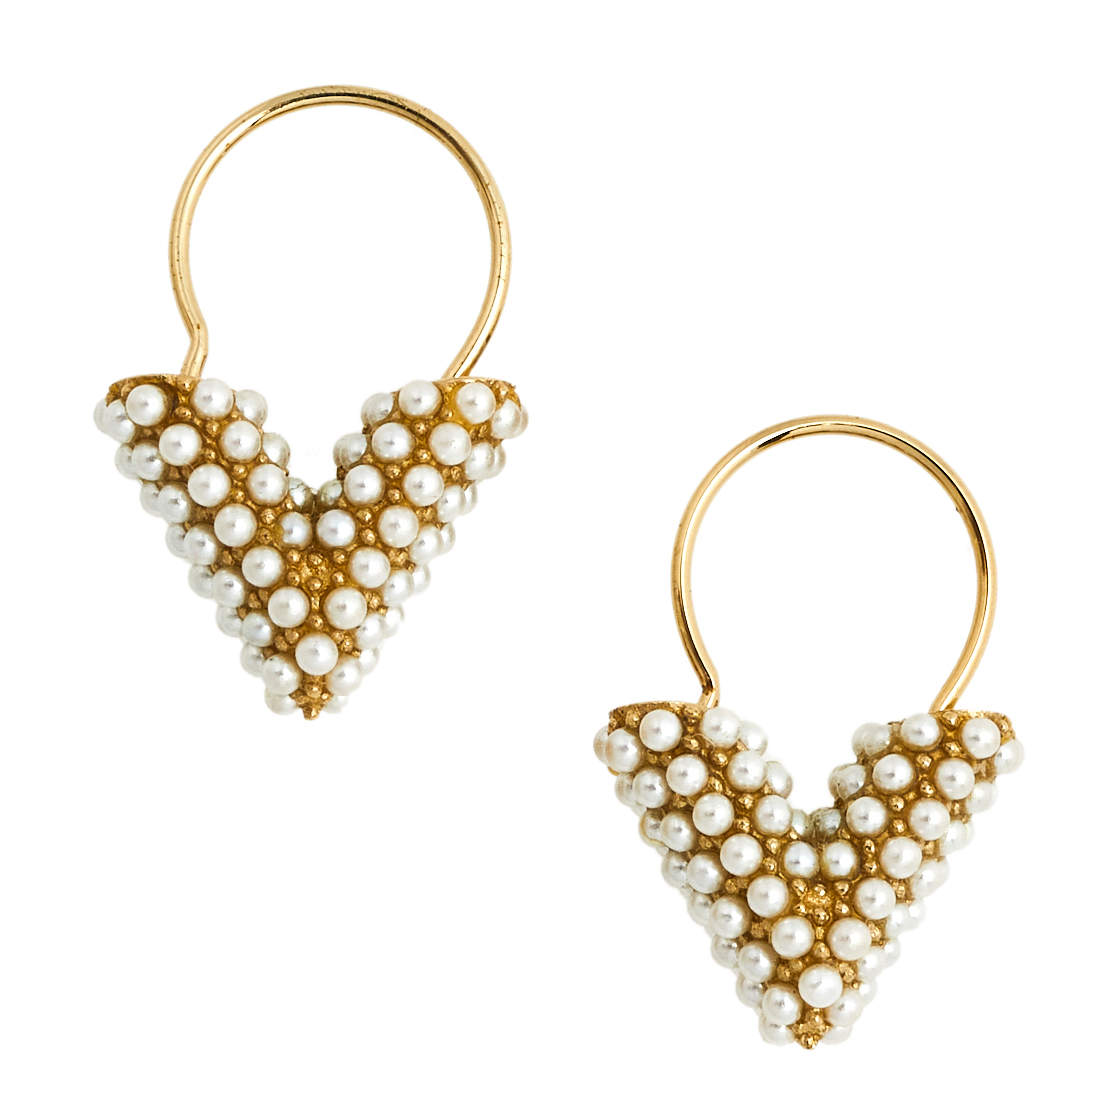 Louis Vuitton Faux Pearl Essential V Perle Necklace - Gold-Tone